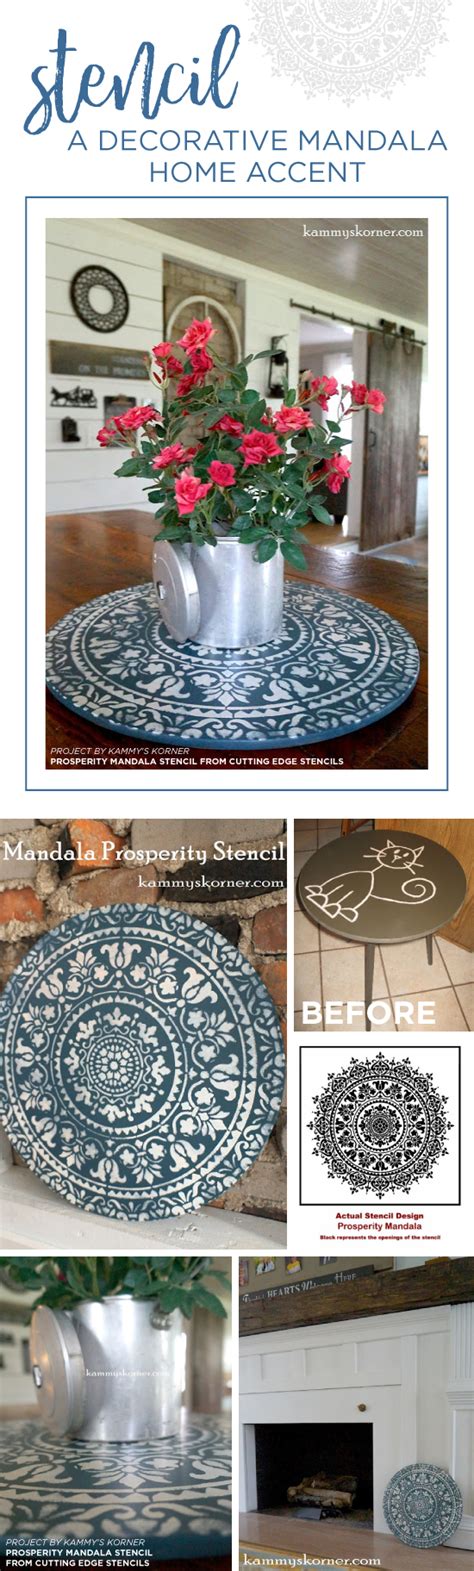 Stencil A Decorative Mandala Home Accent